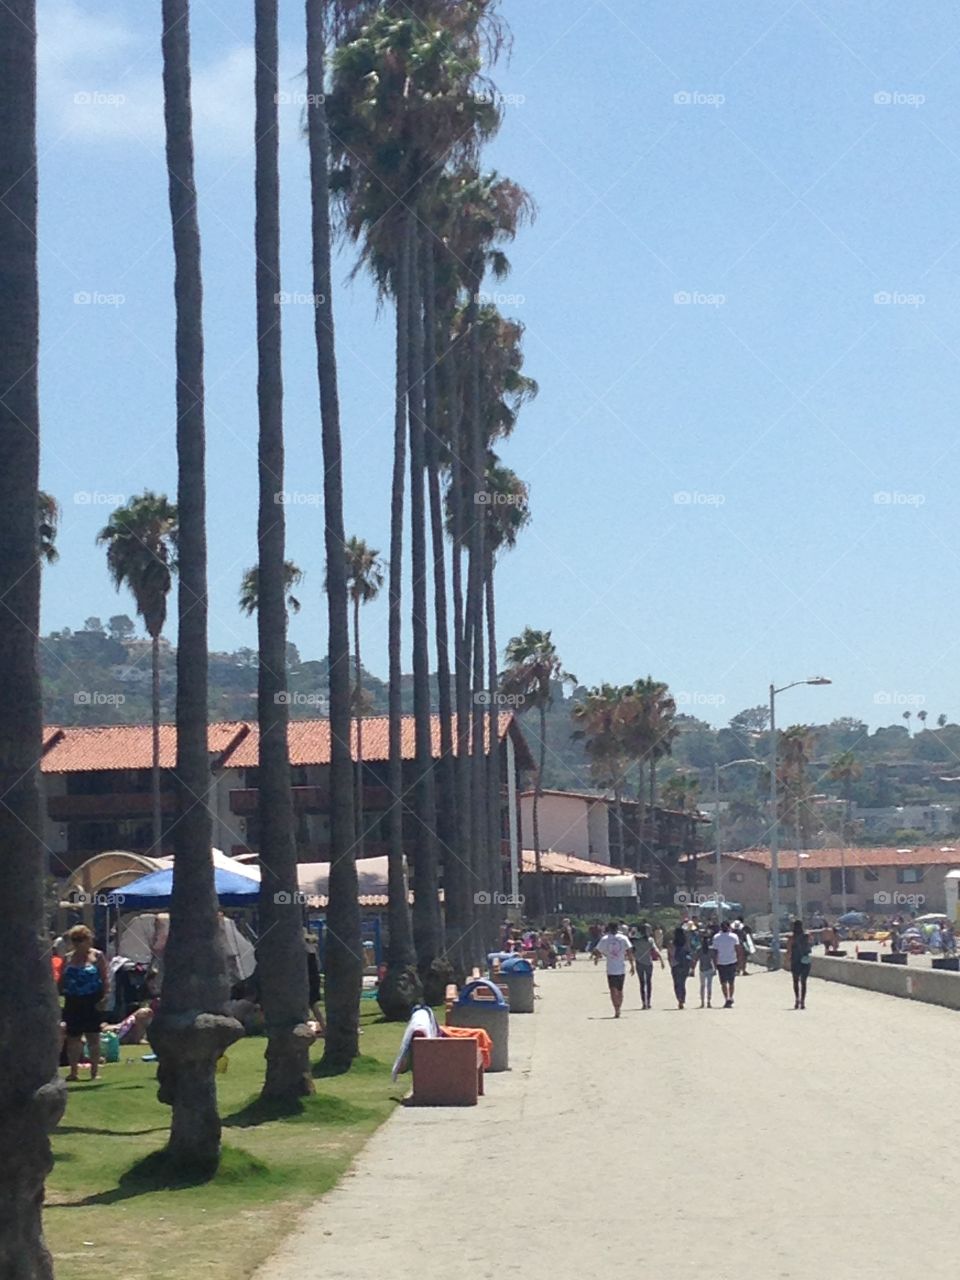 Walkway view at La Jolla Shores Beach near San Diego, CA